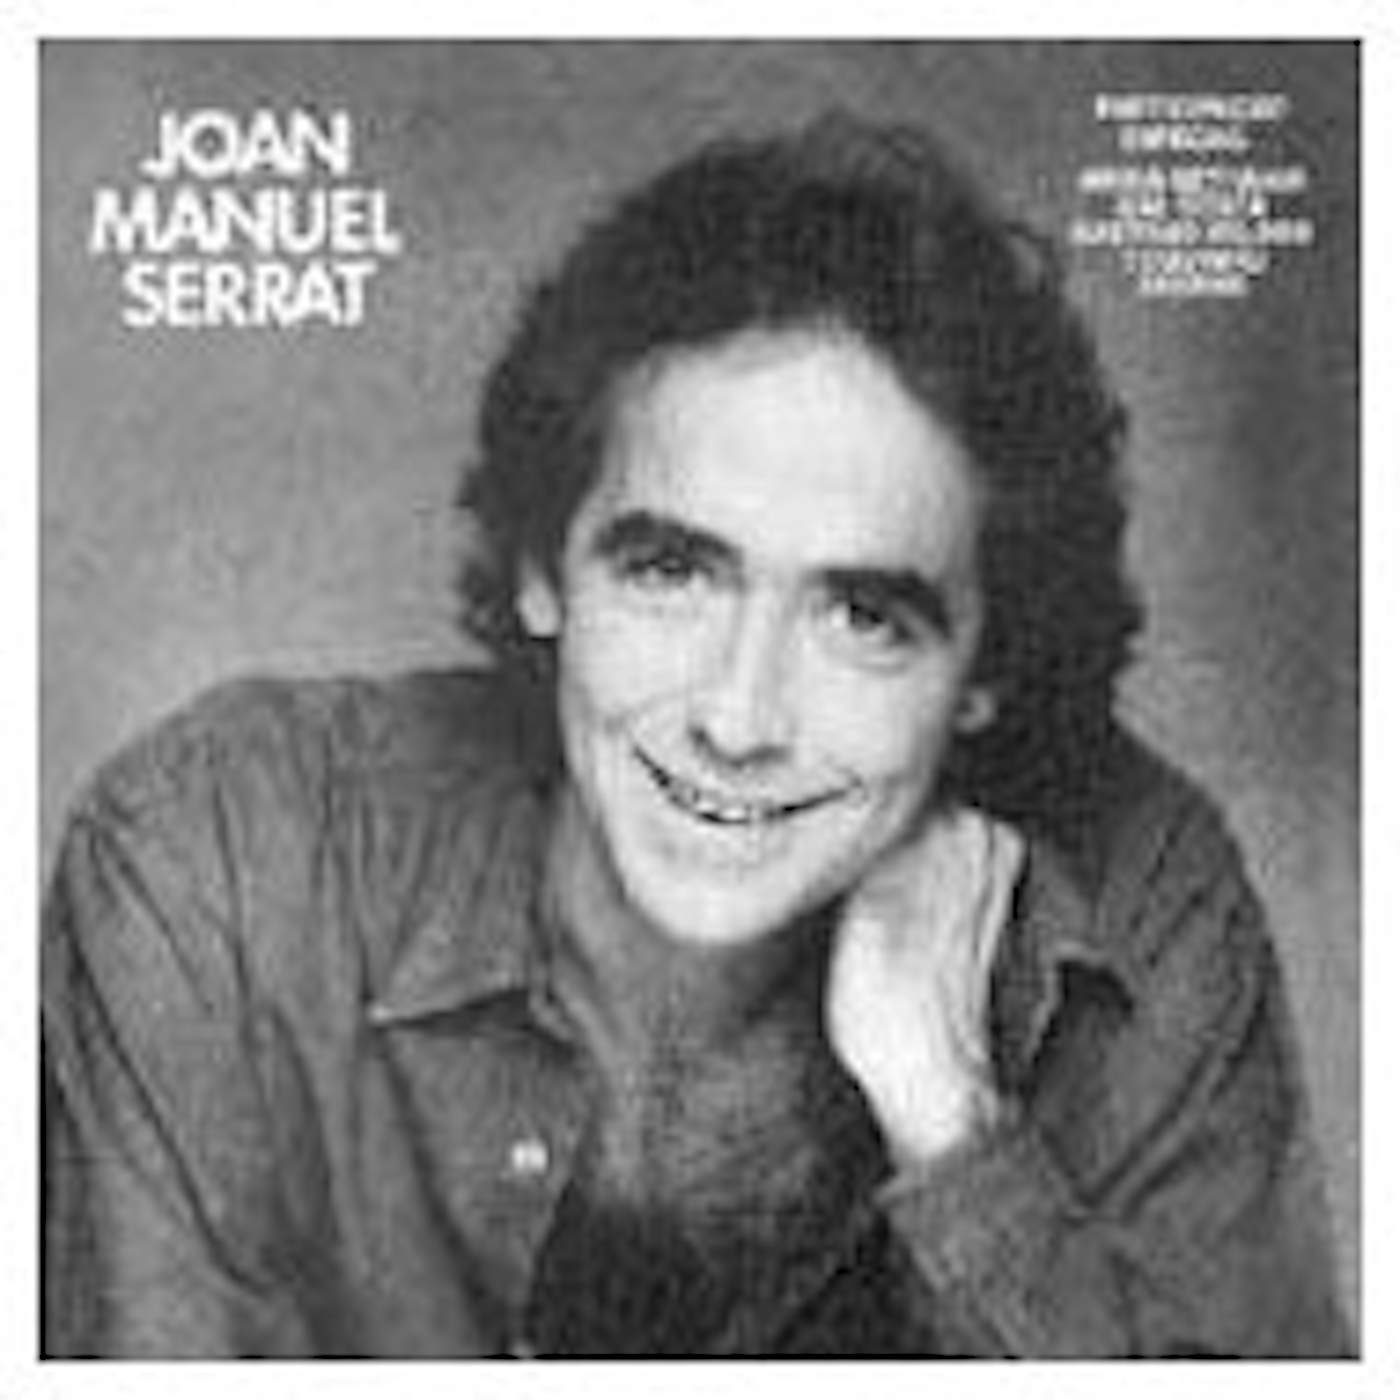 Joan Manuel Serrat SINCERAMENTE TUYO CD